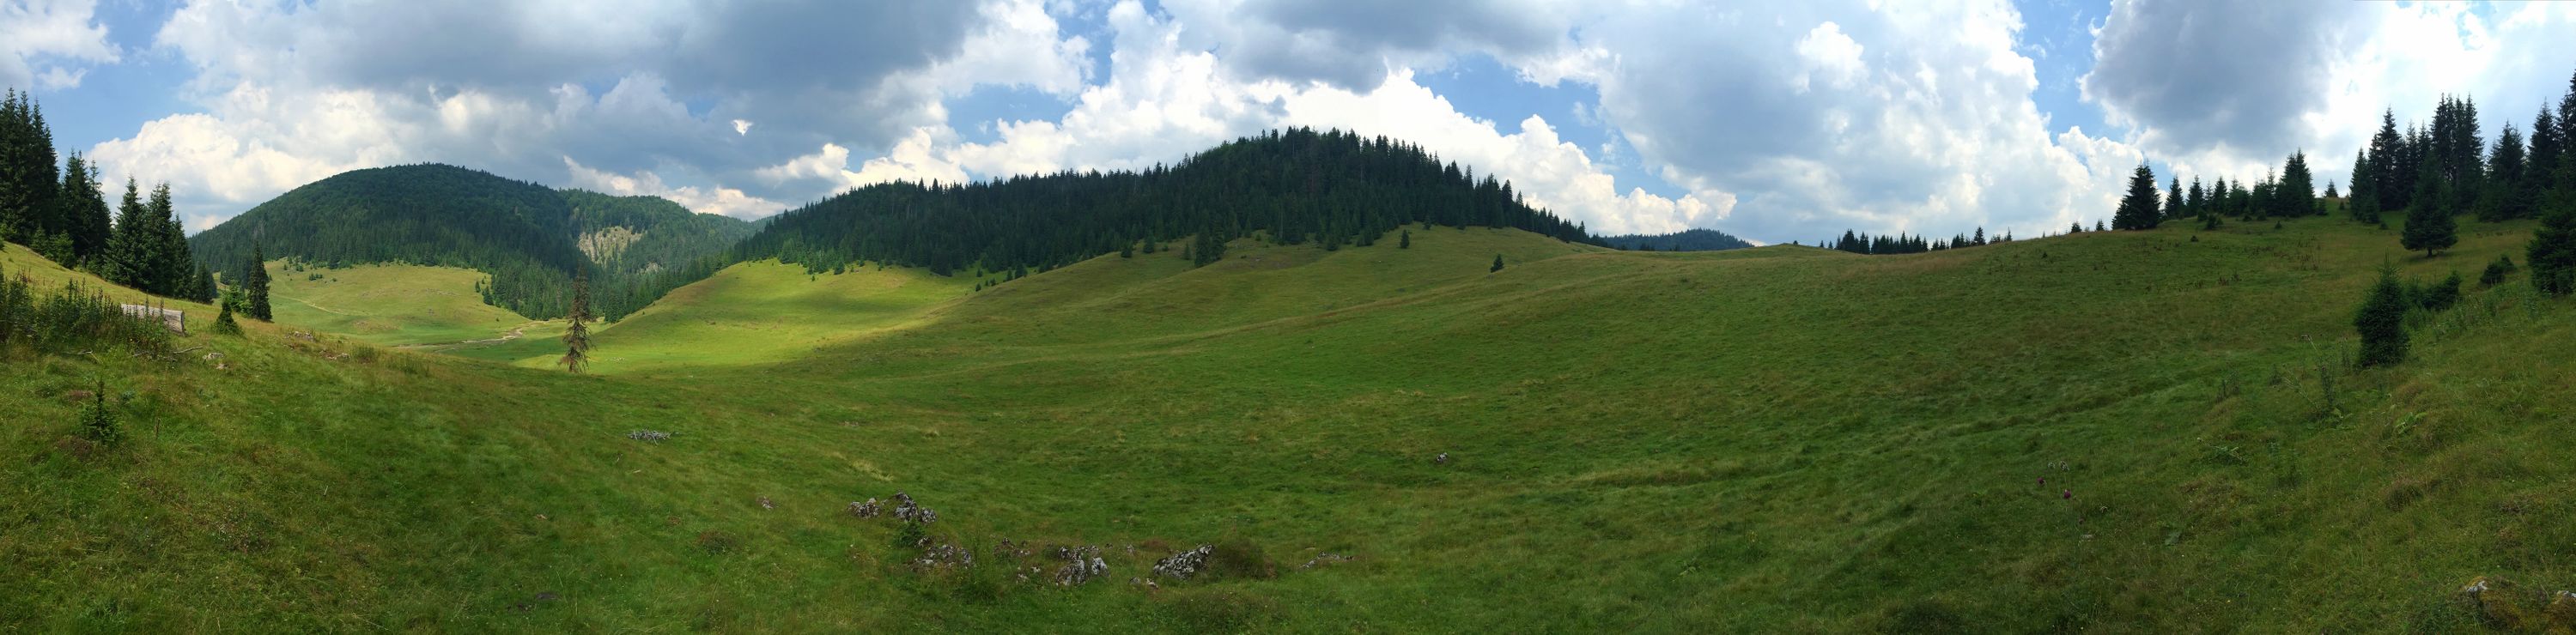 Panoramic shot of the Padiș plateau. iPhone 6 Plus: 1/2639 @ ƒ/2.2, ISO 32